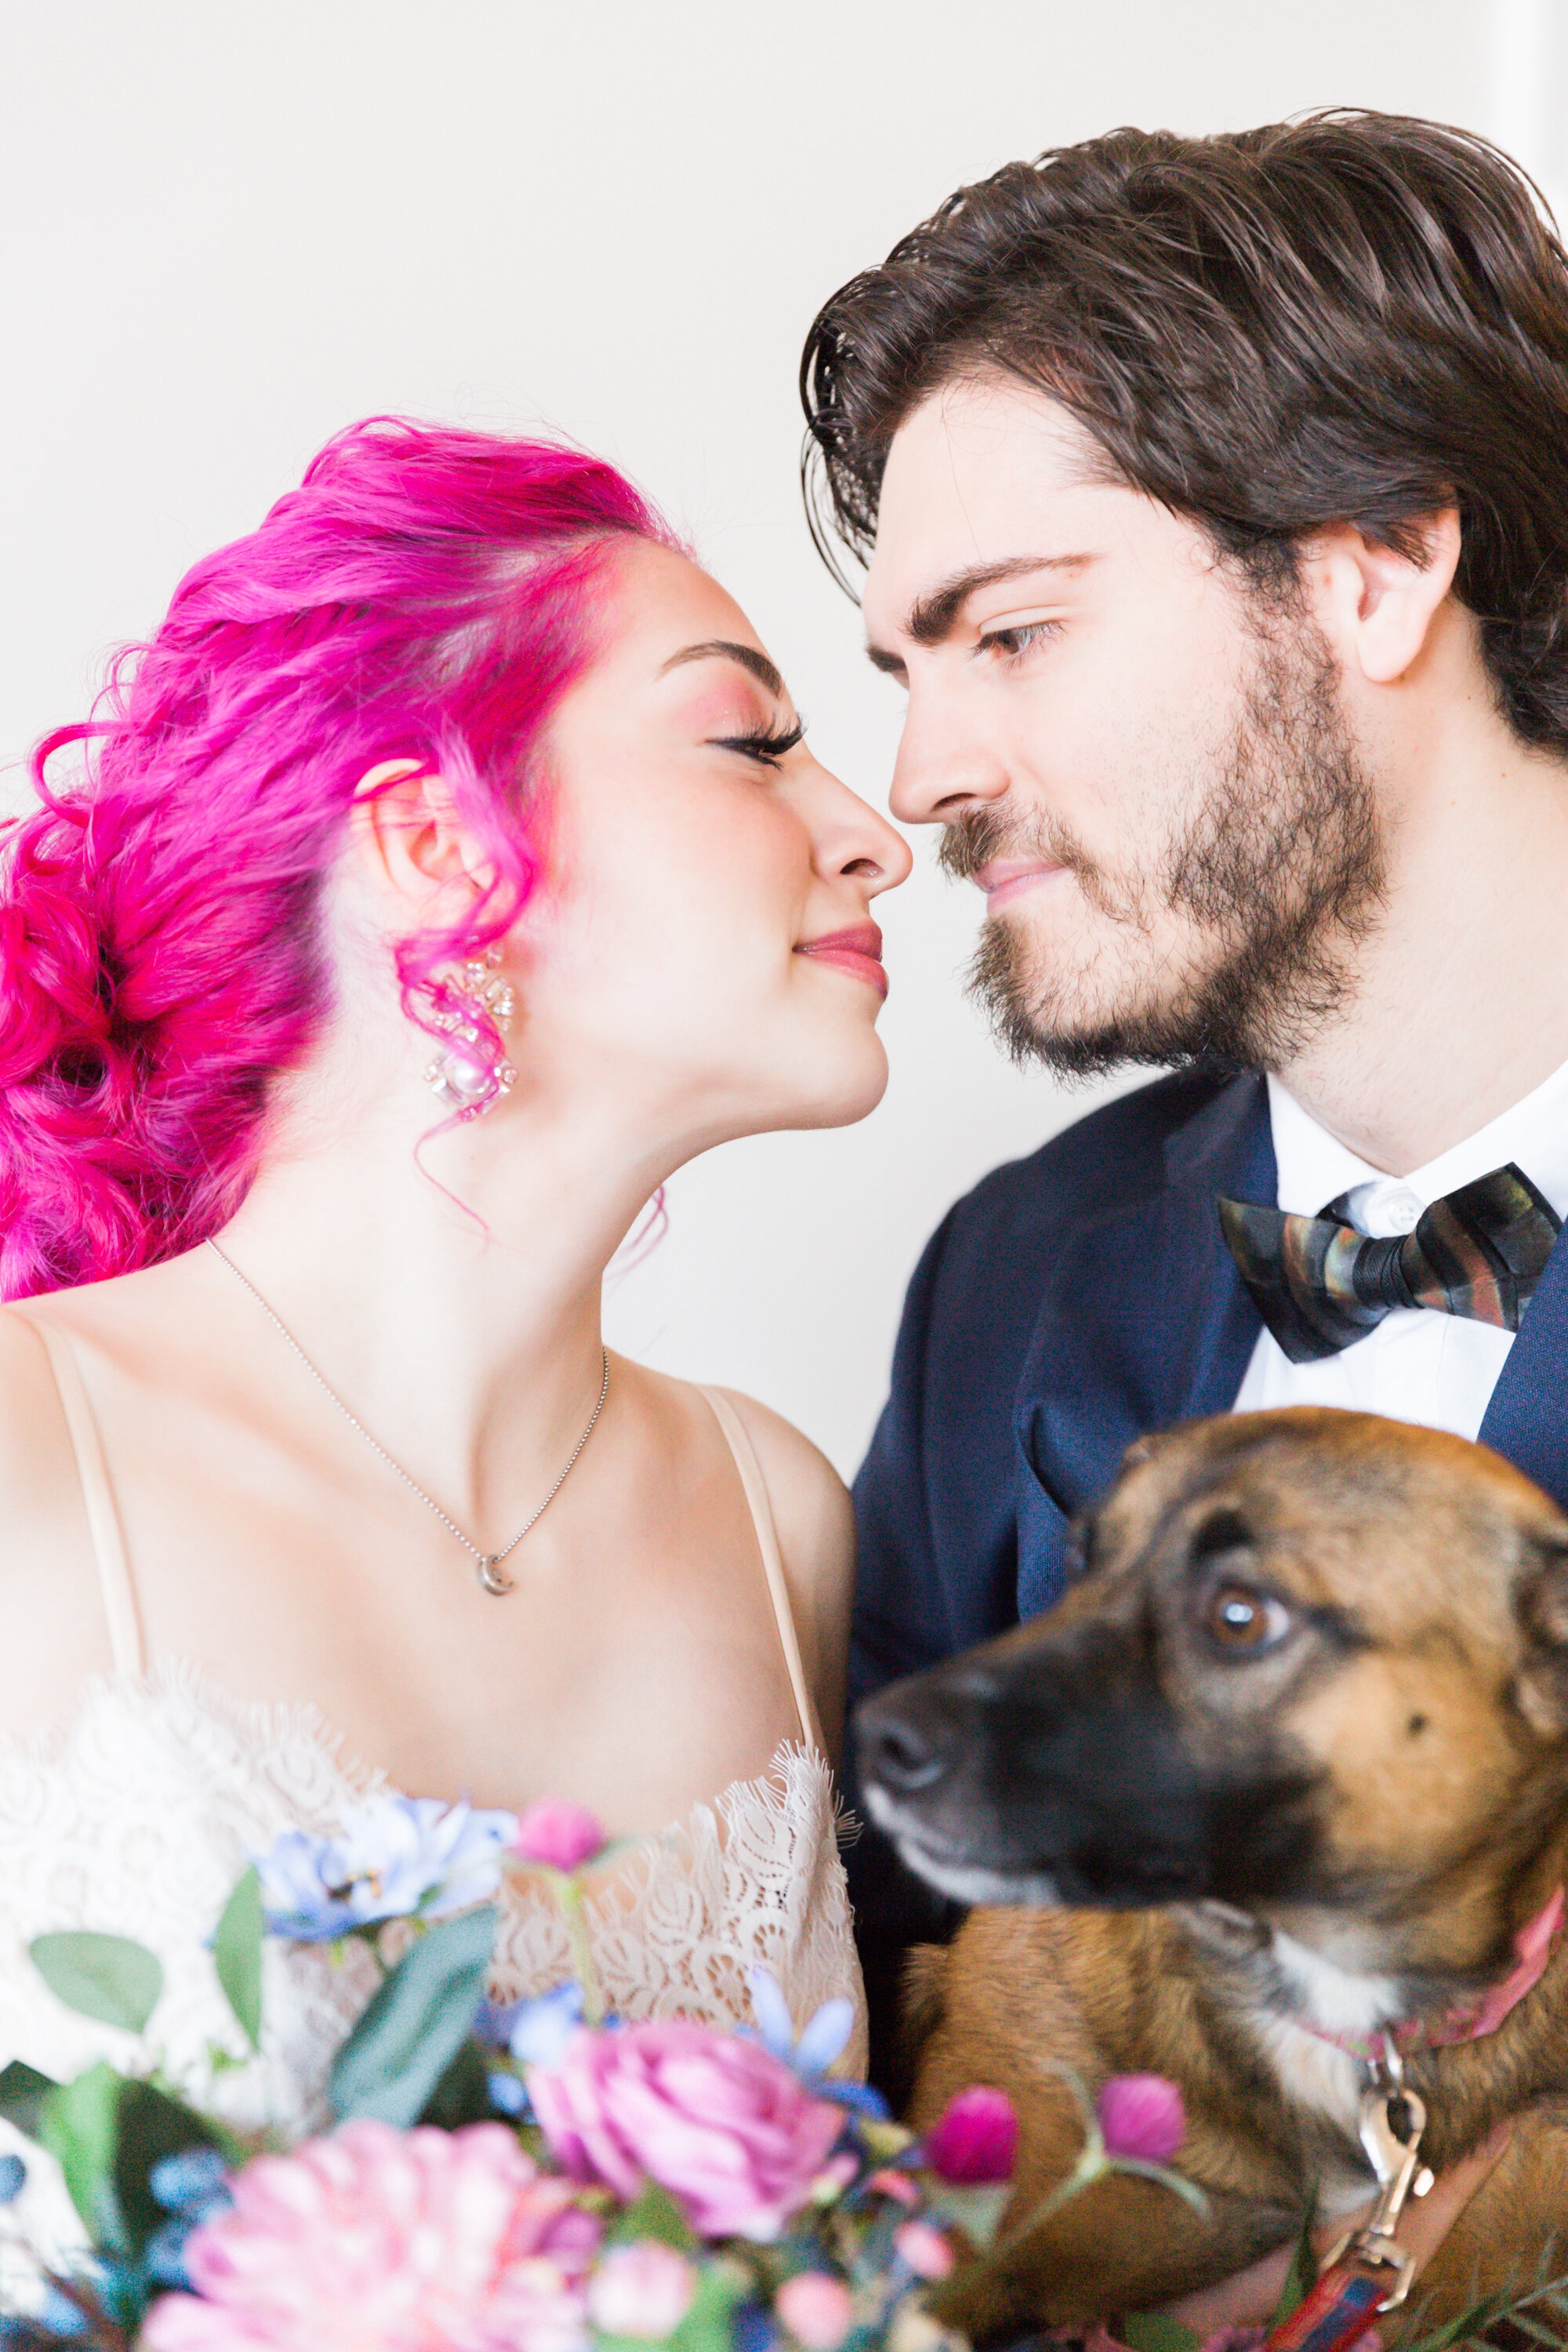 haven street ballroom wedding with puppies best baltimore photographers megapixels media photography-4.jpg